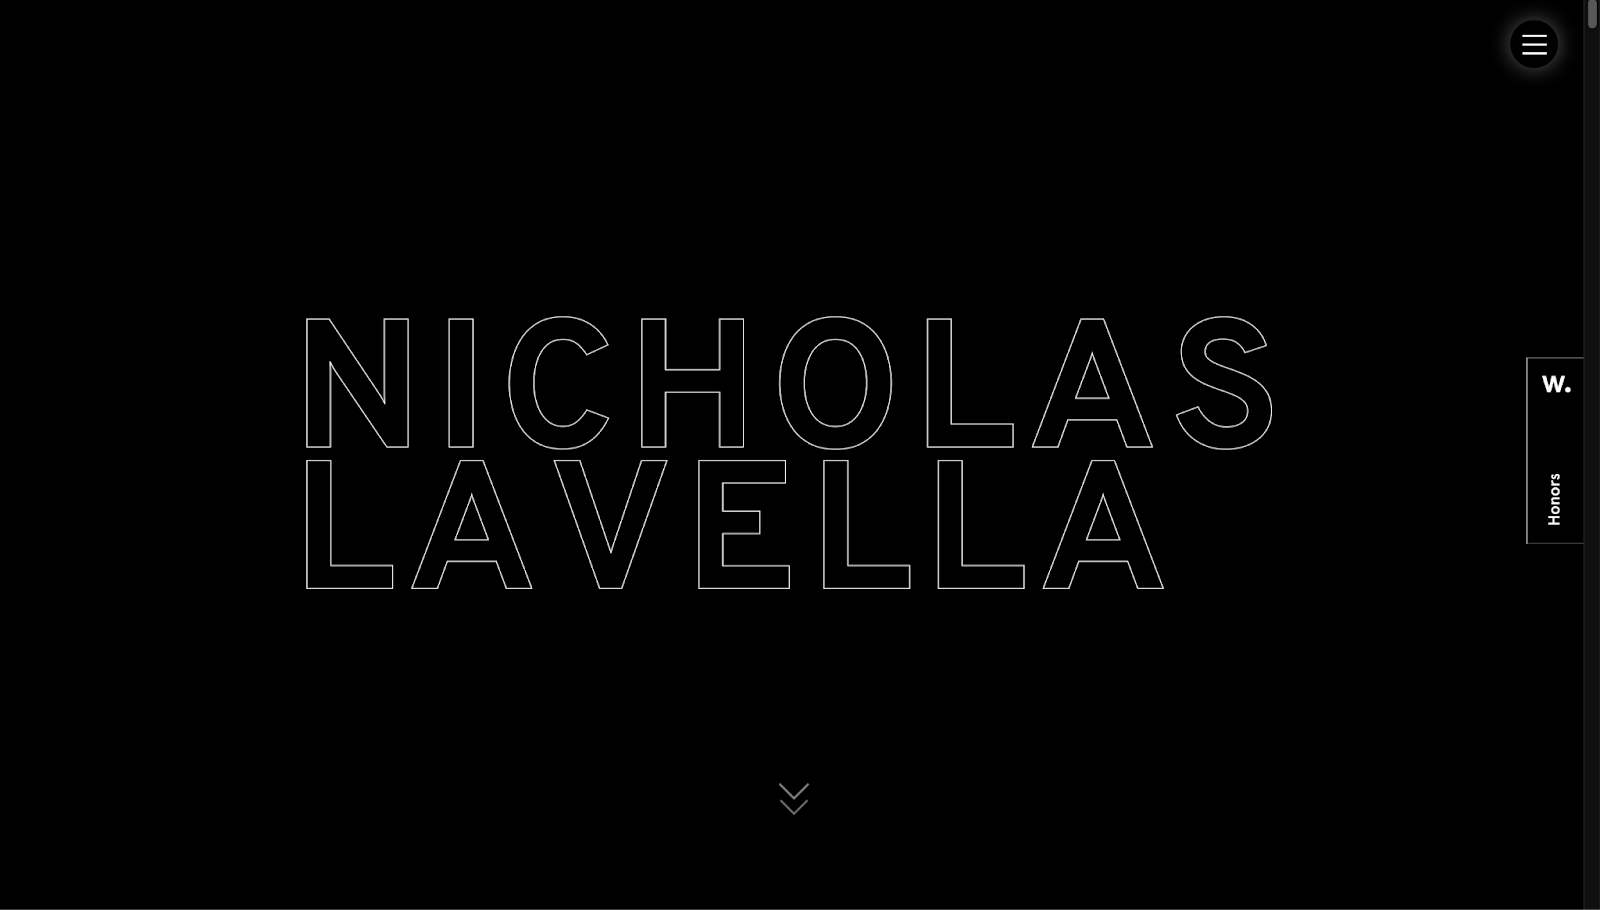 freelancer website example, Nicholas Lavella